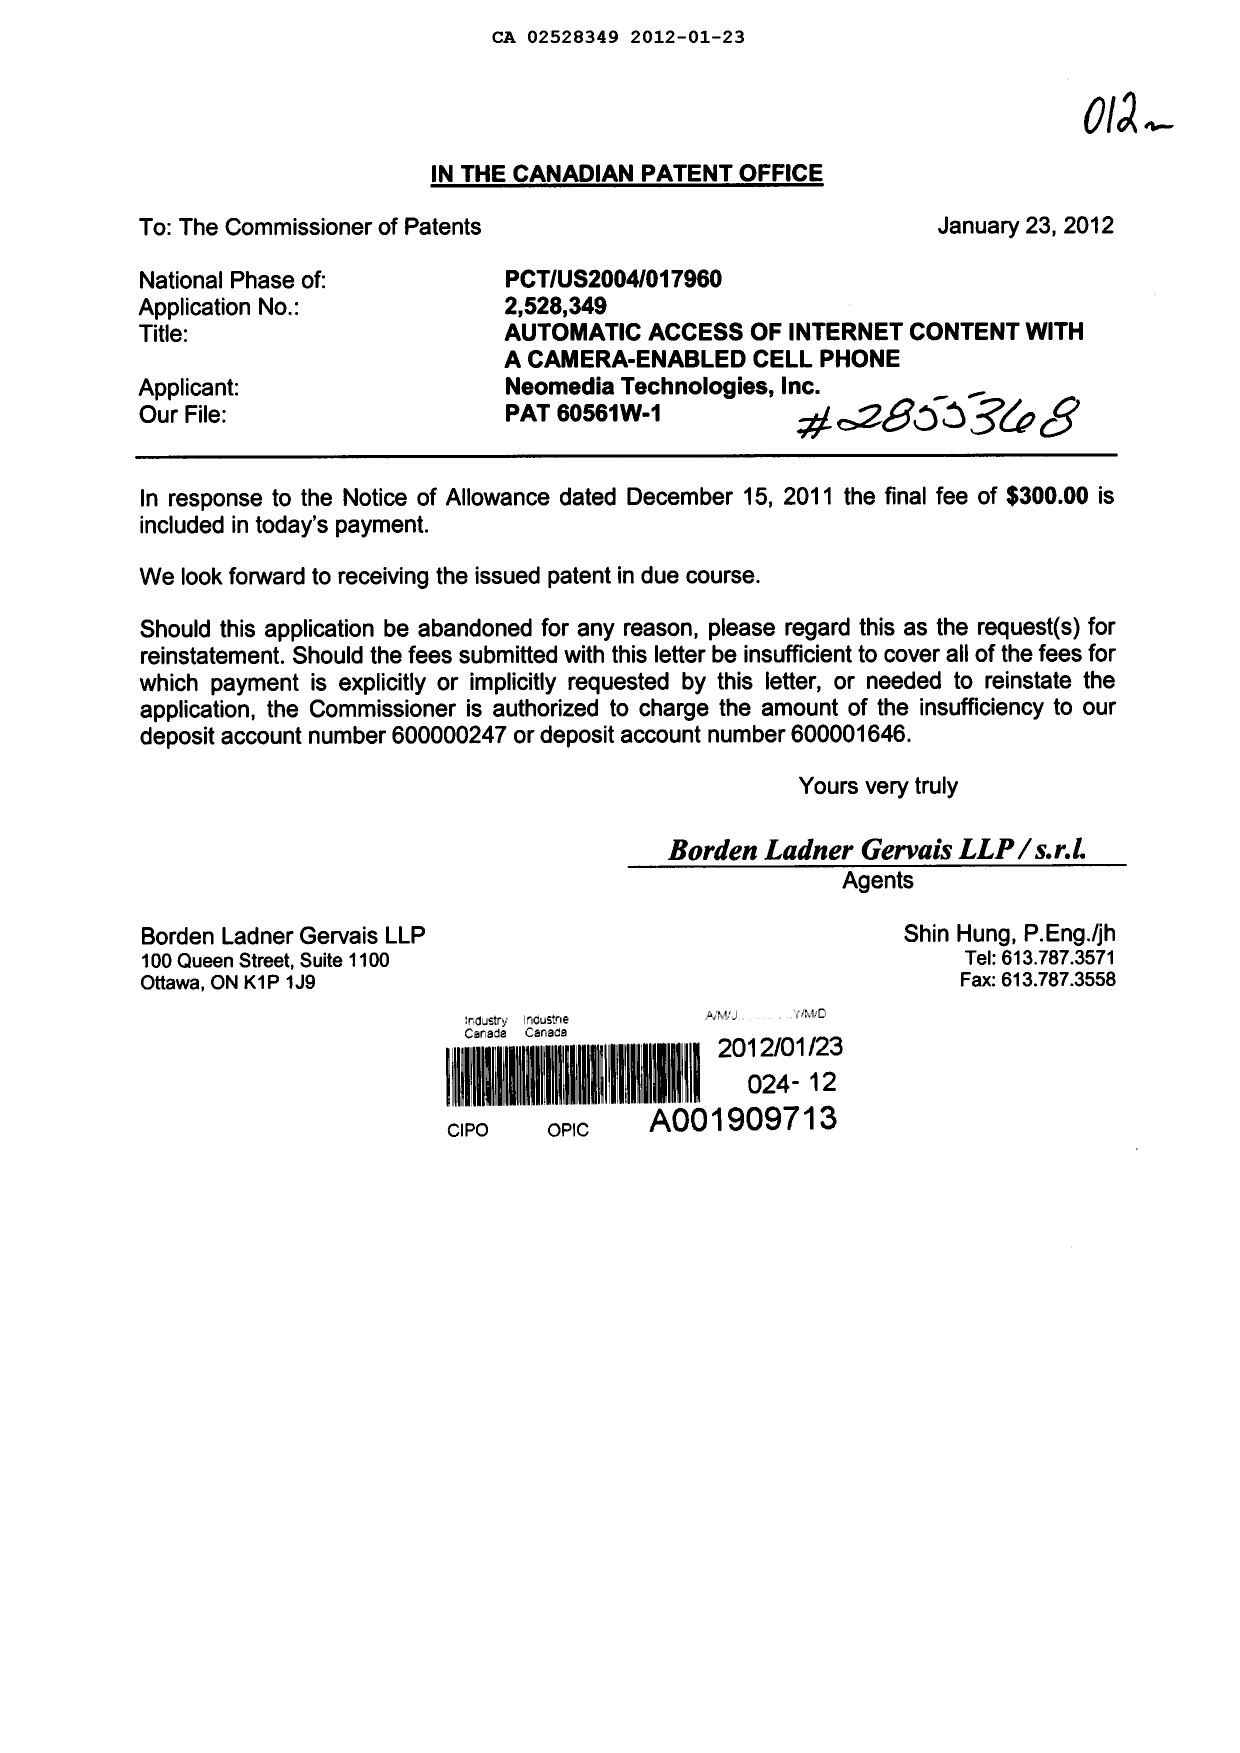 Canadian Patent Document 2528349. Correspondence 20120123. Image 1 of 1